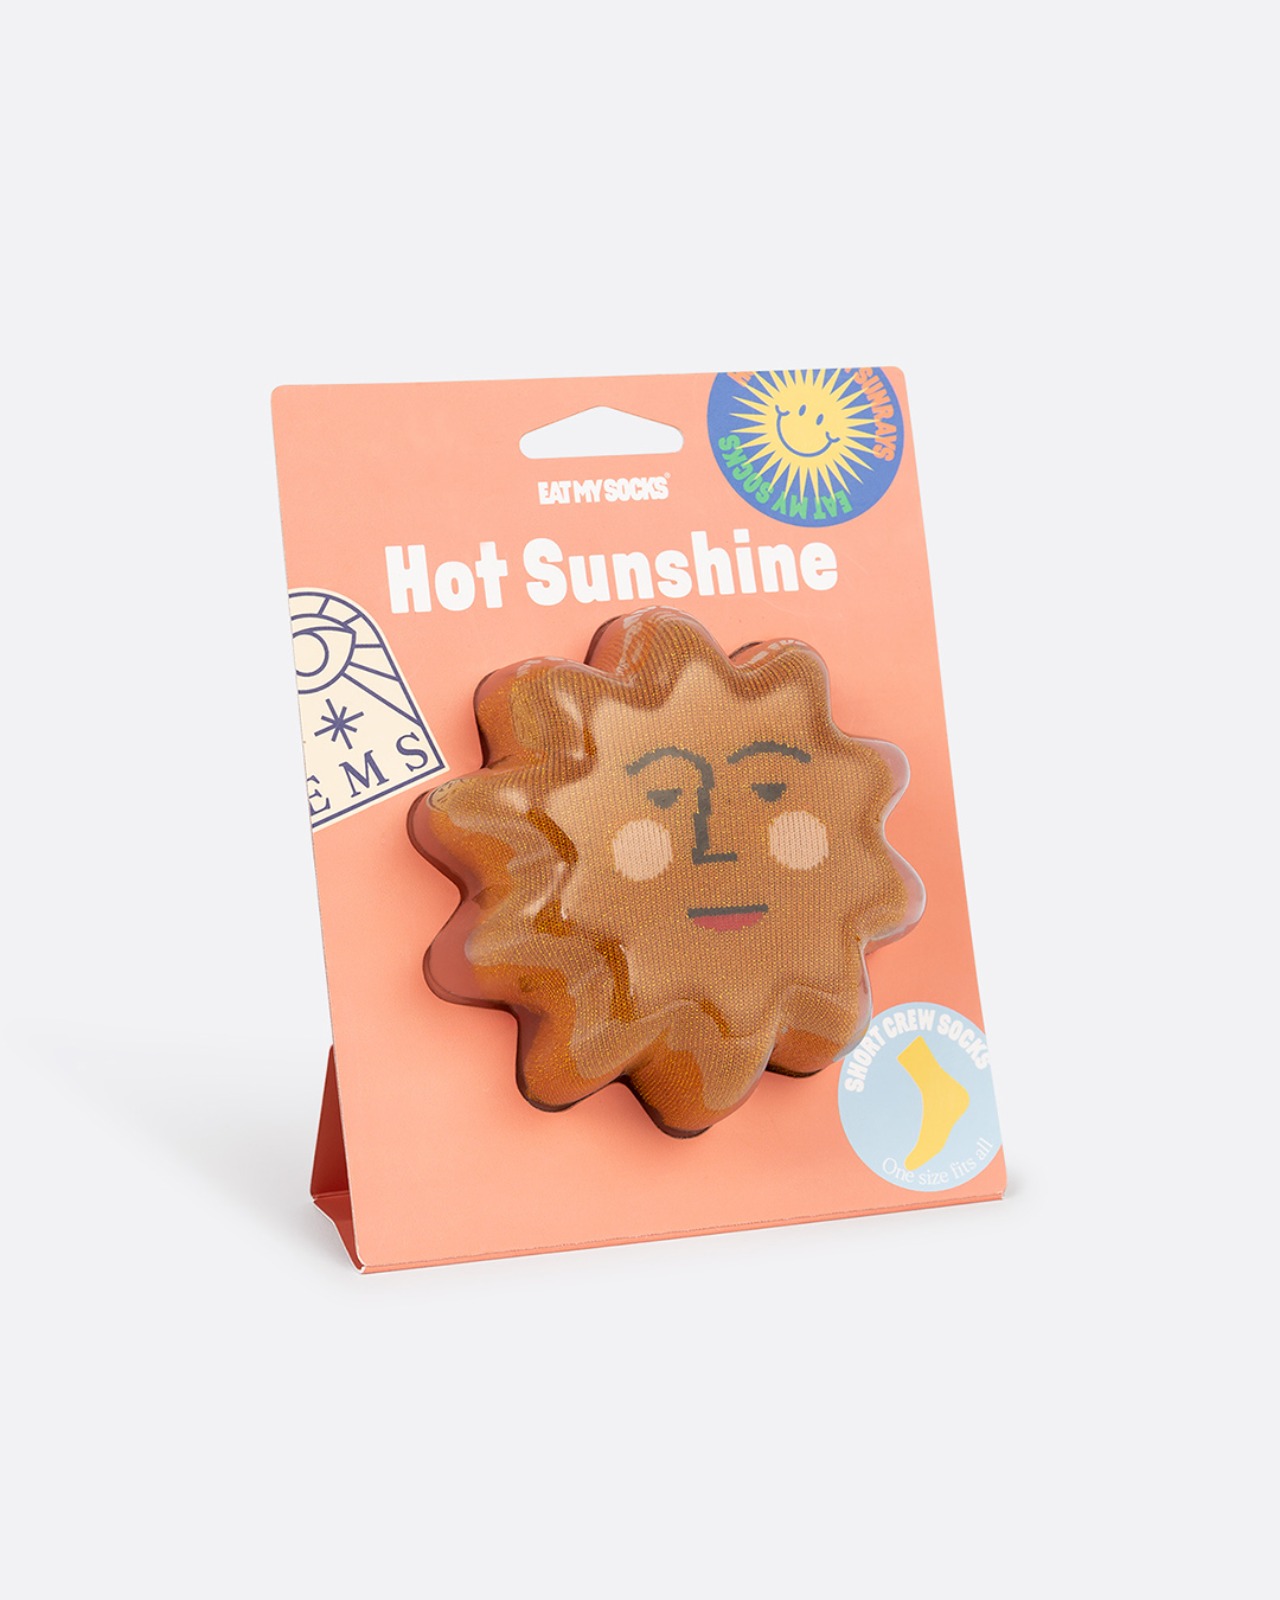 [EAT MY SOCKS] Hot Sunshine